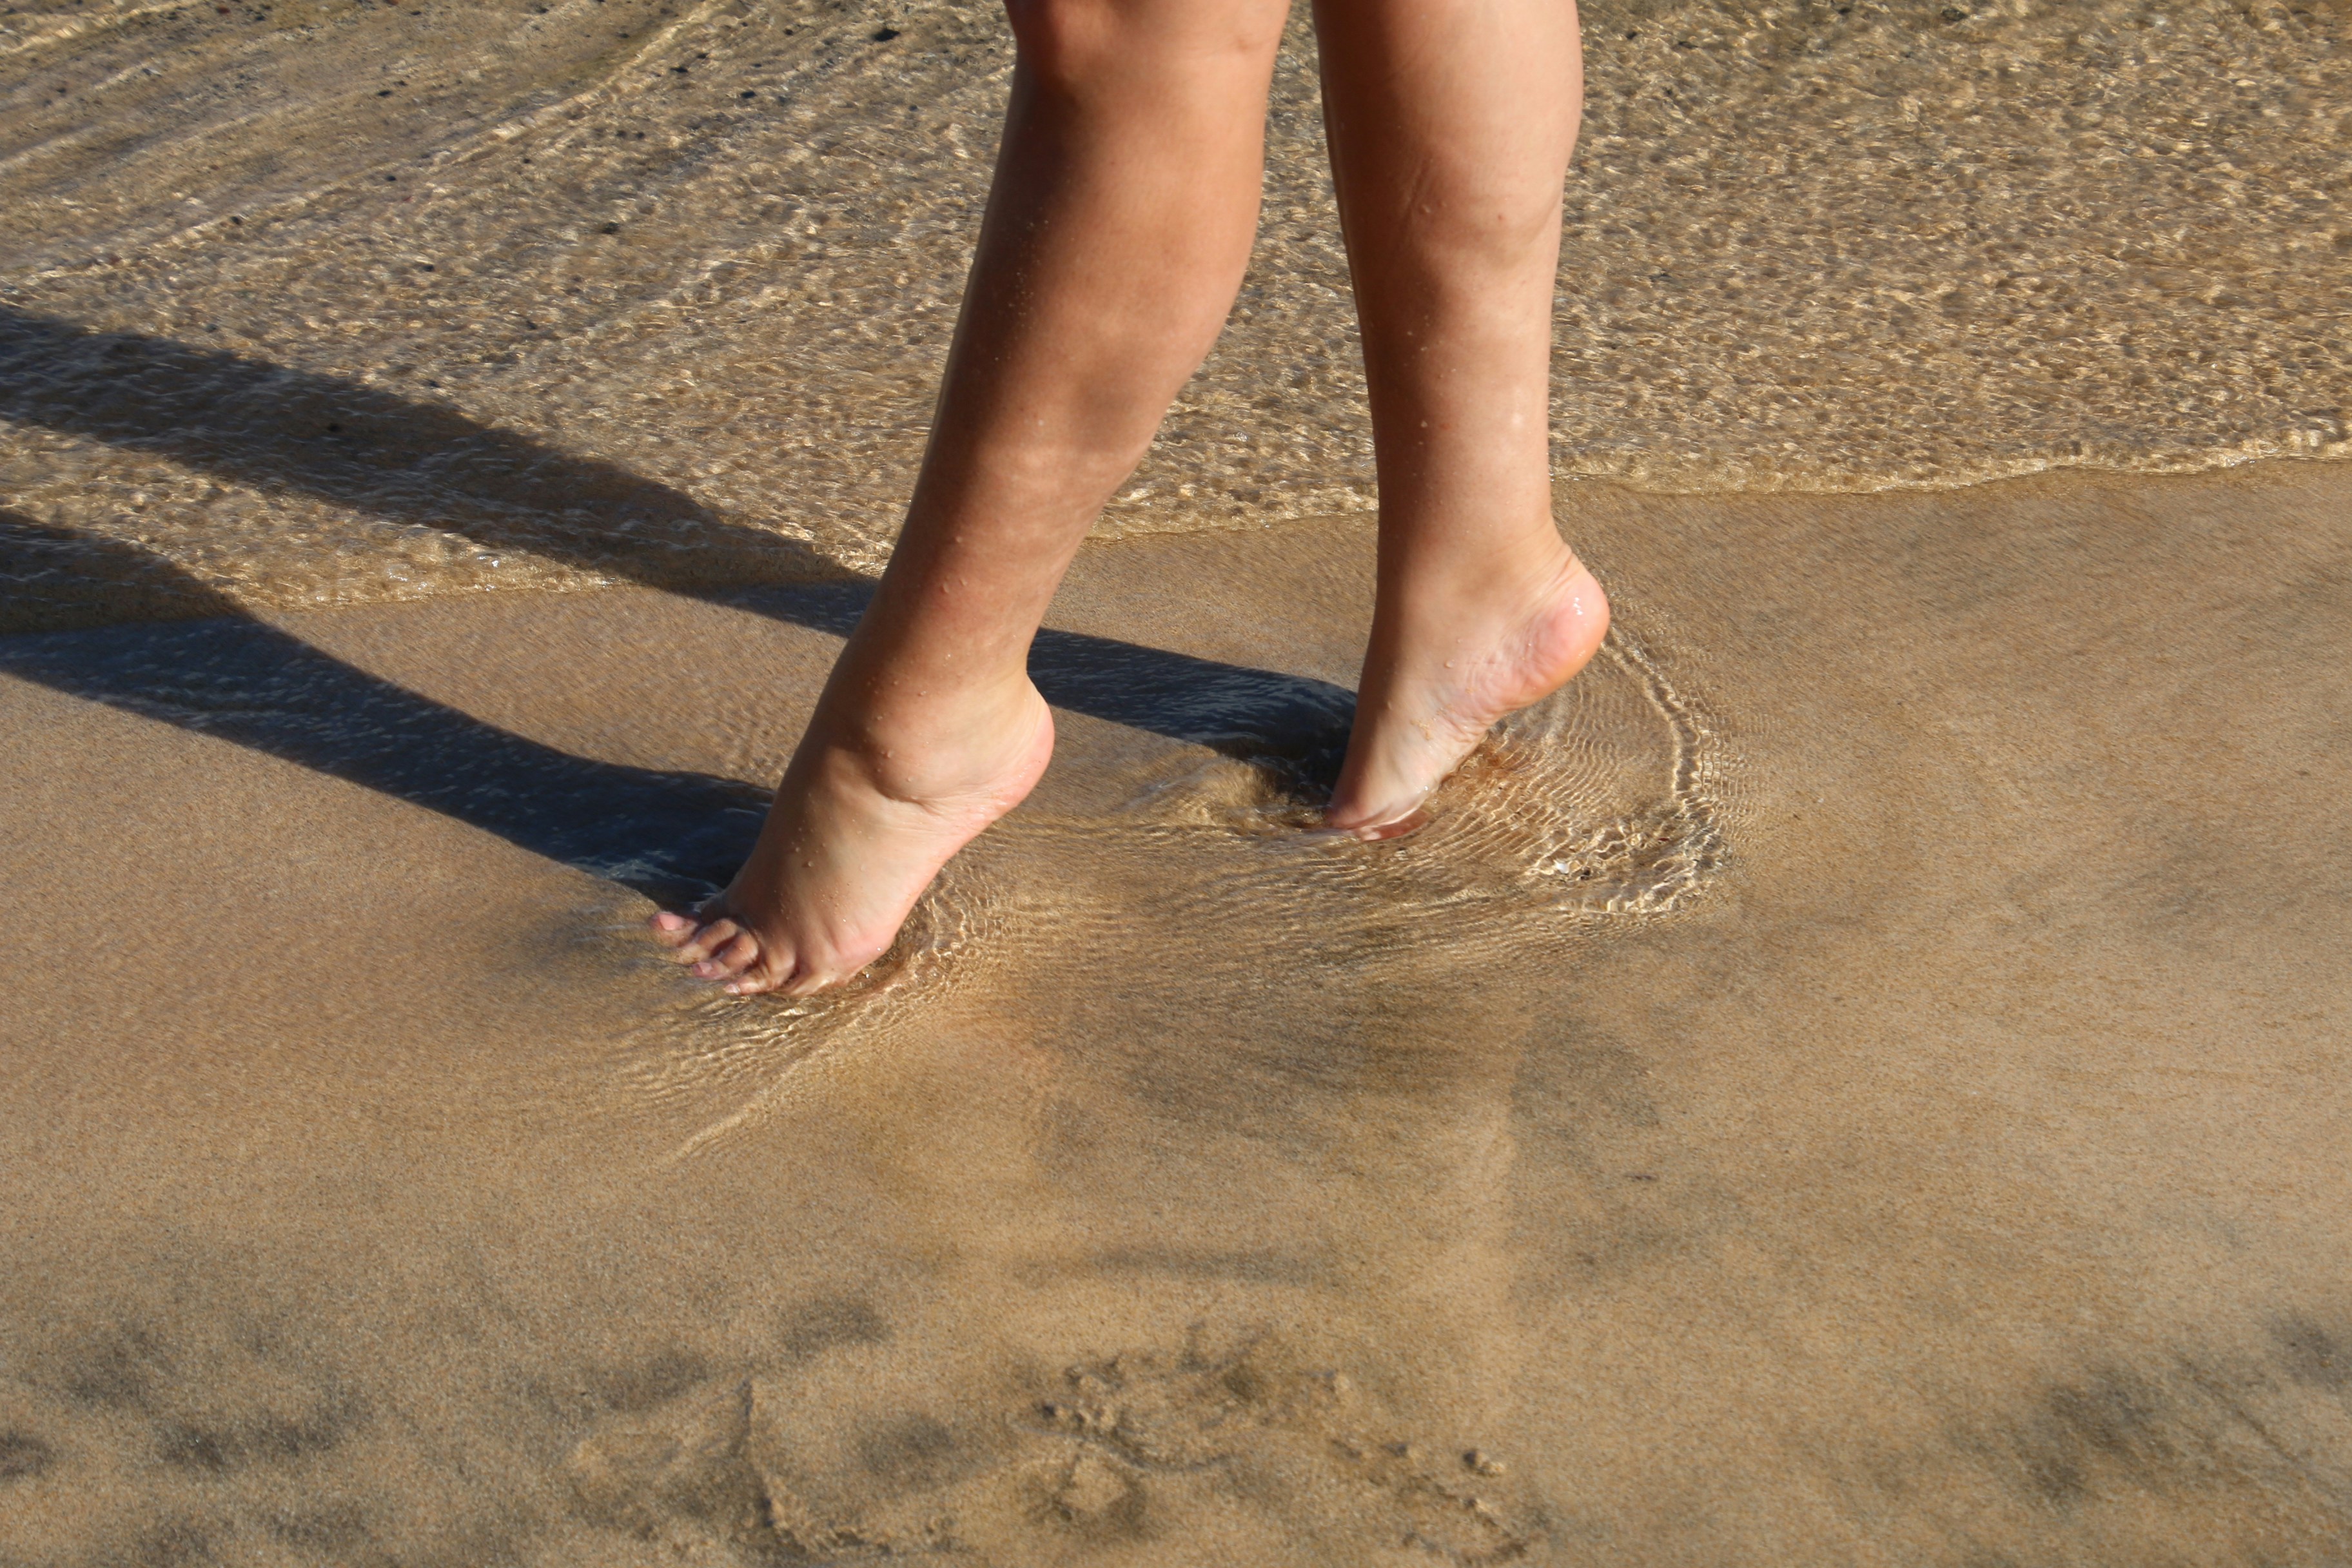 People 3648x2432 women beach sand covered feet legs toes model barefoot standing tiptoe standing in water sand women outdoors foot fetishism